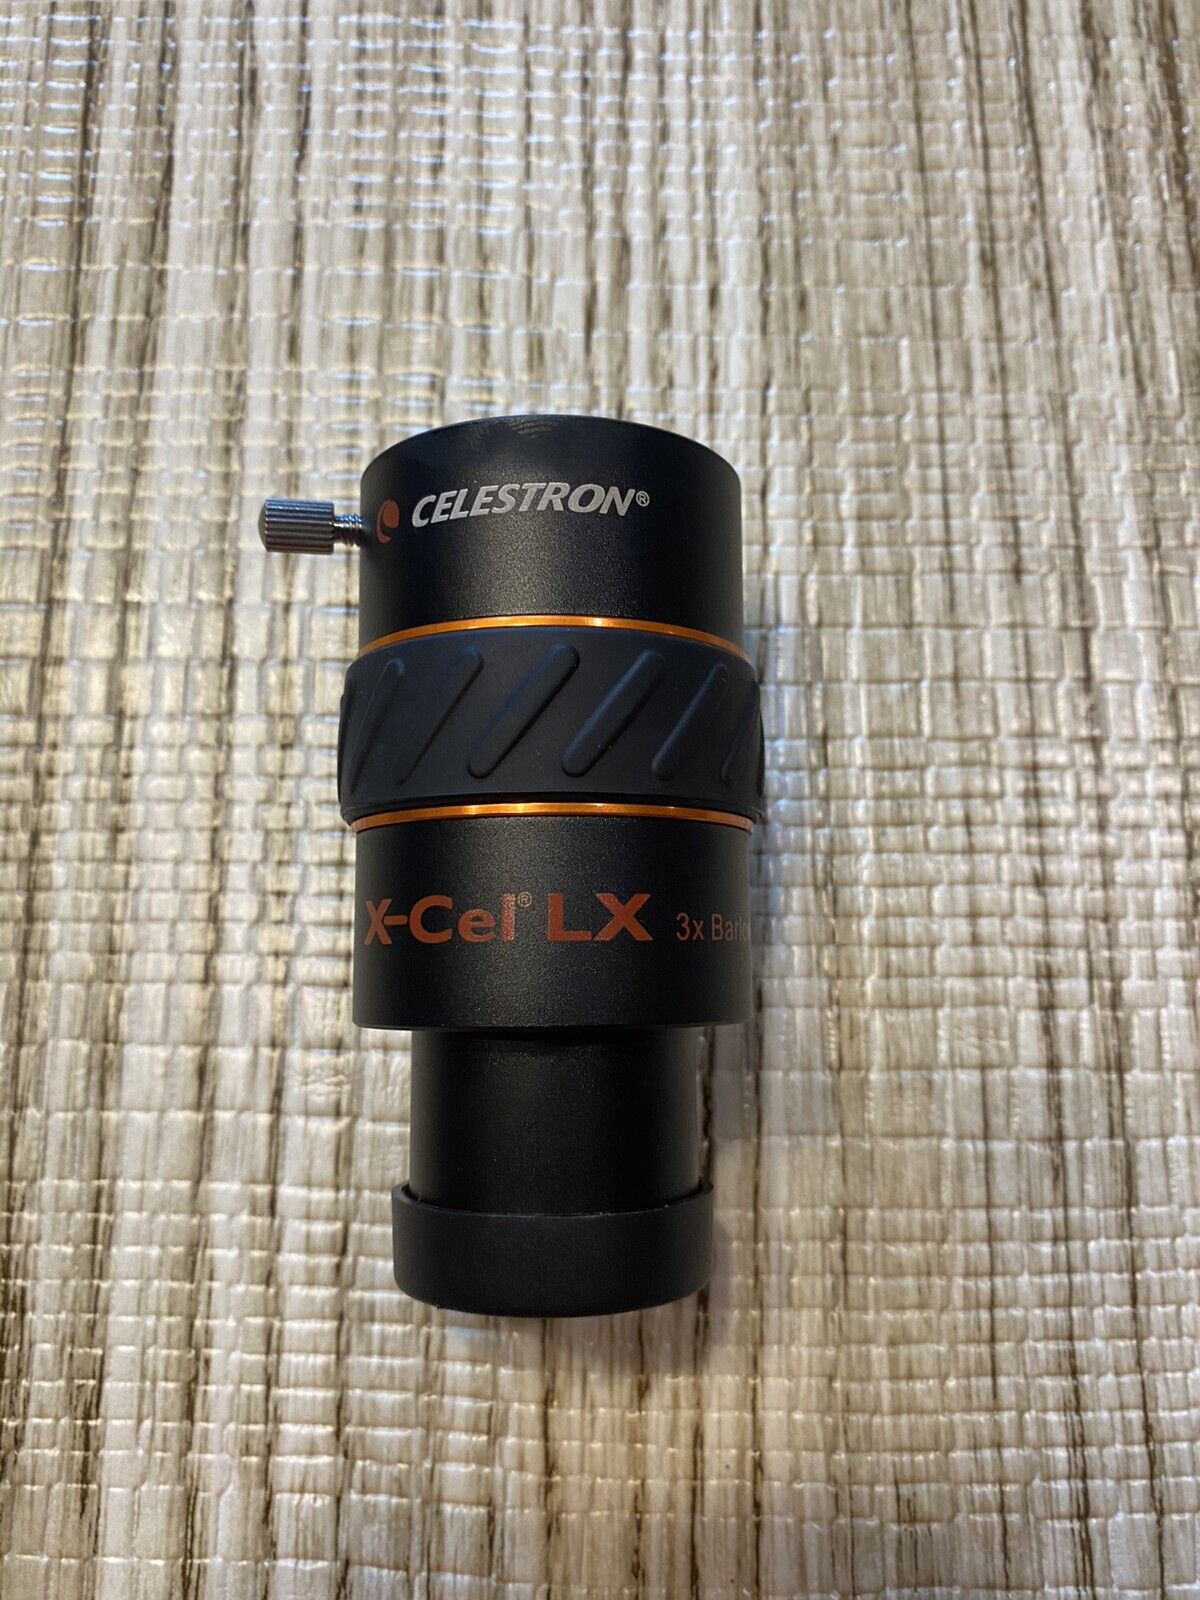 celestron x-cel lx 3x barlow Lens